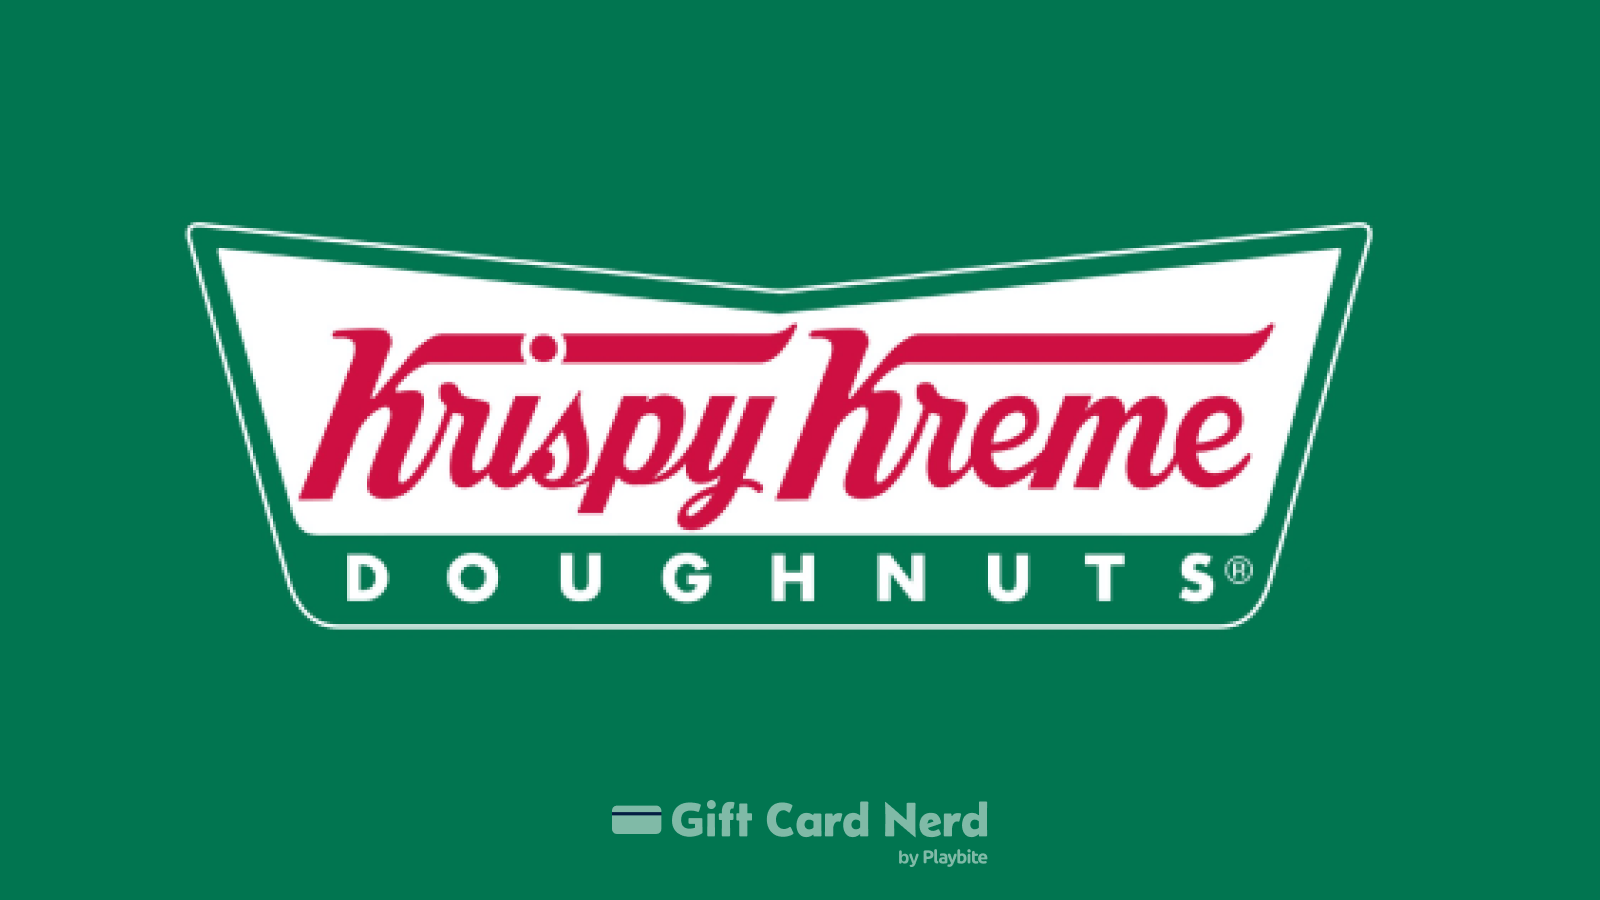 Can I Use a Krispy Kreme Gift Card on Uber Eats?